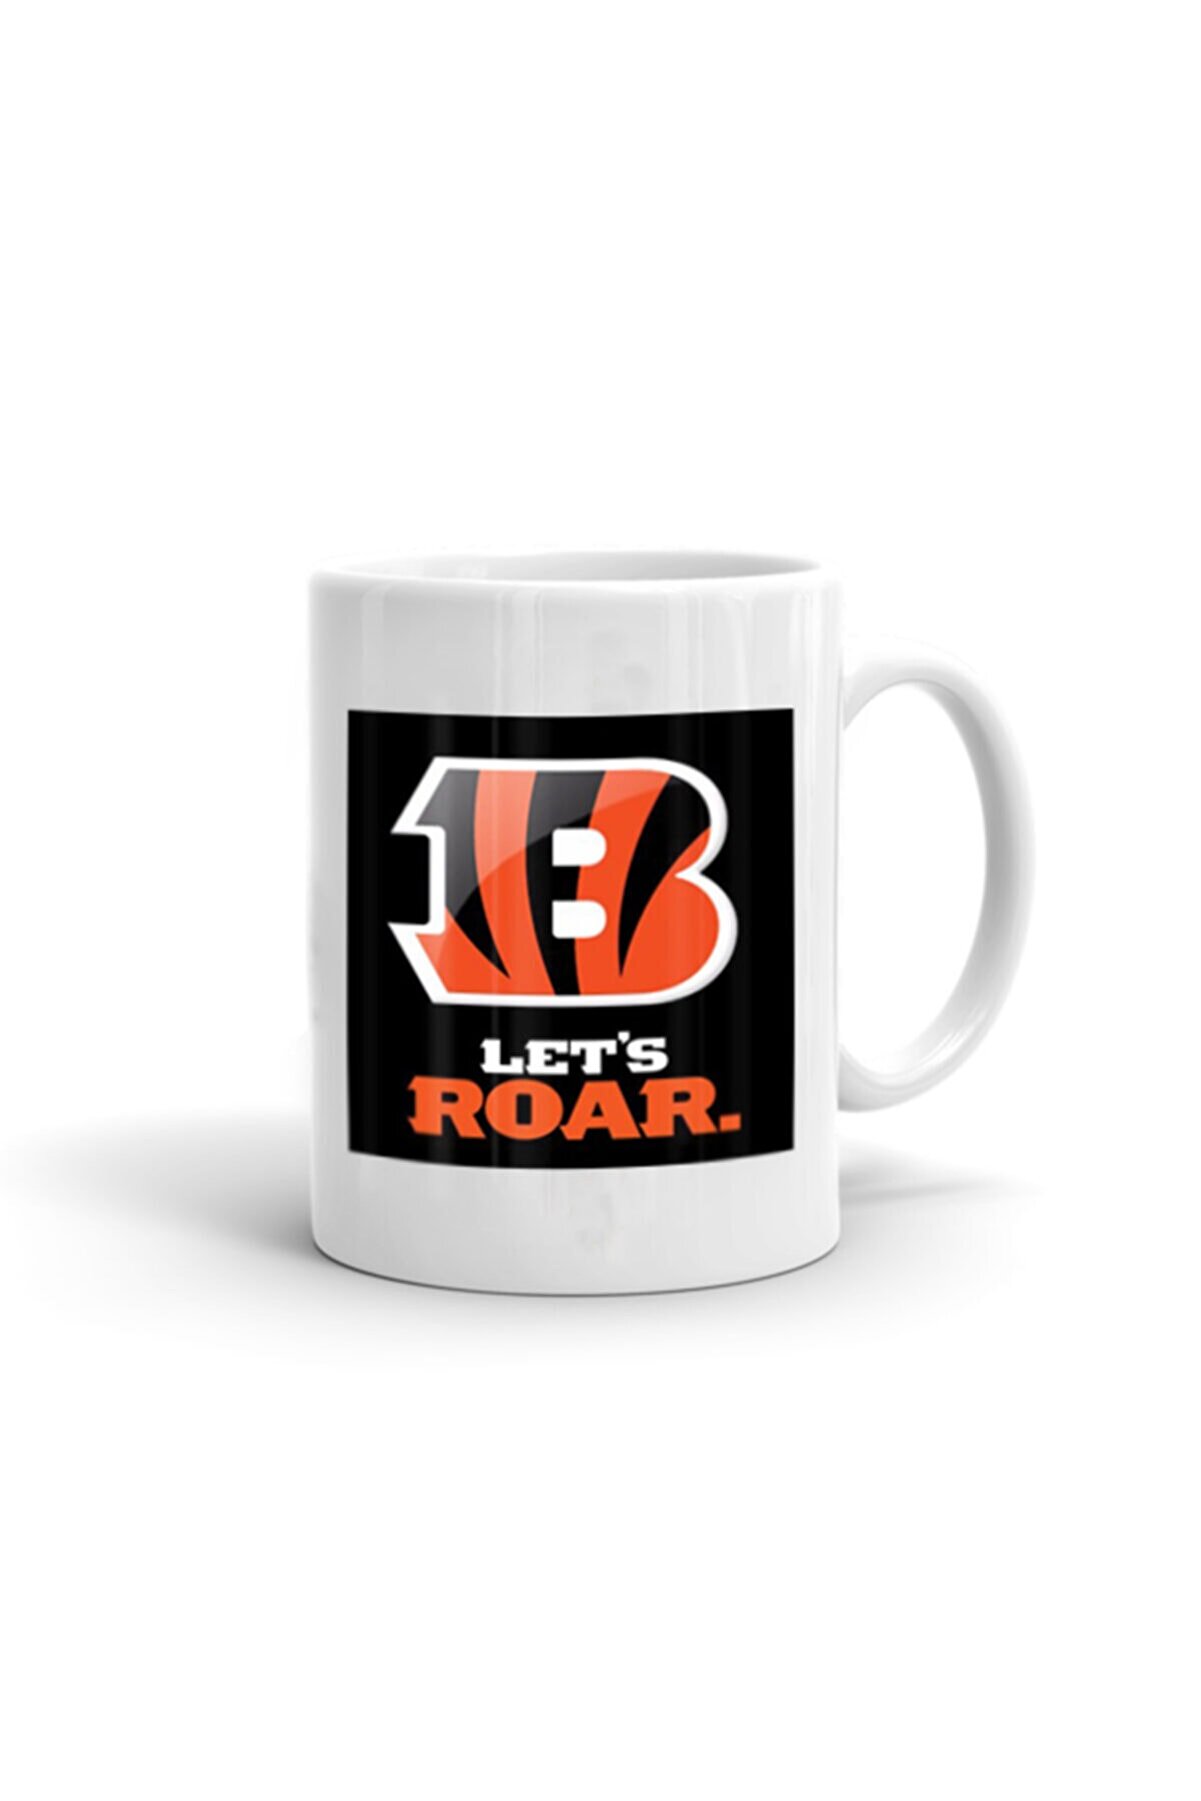 Usateamfans Cincinnati Bengals New Mug